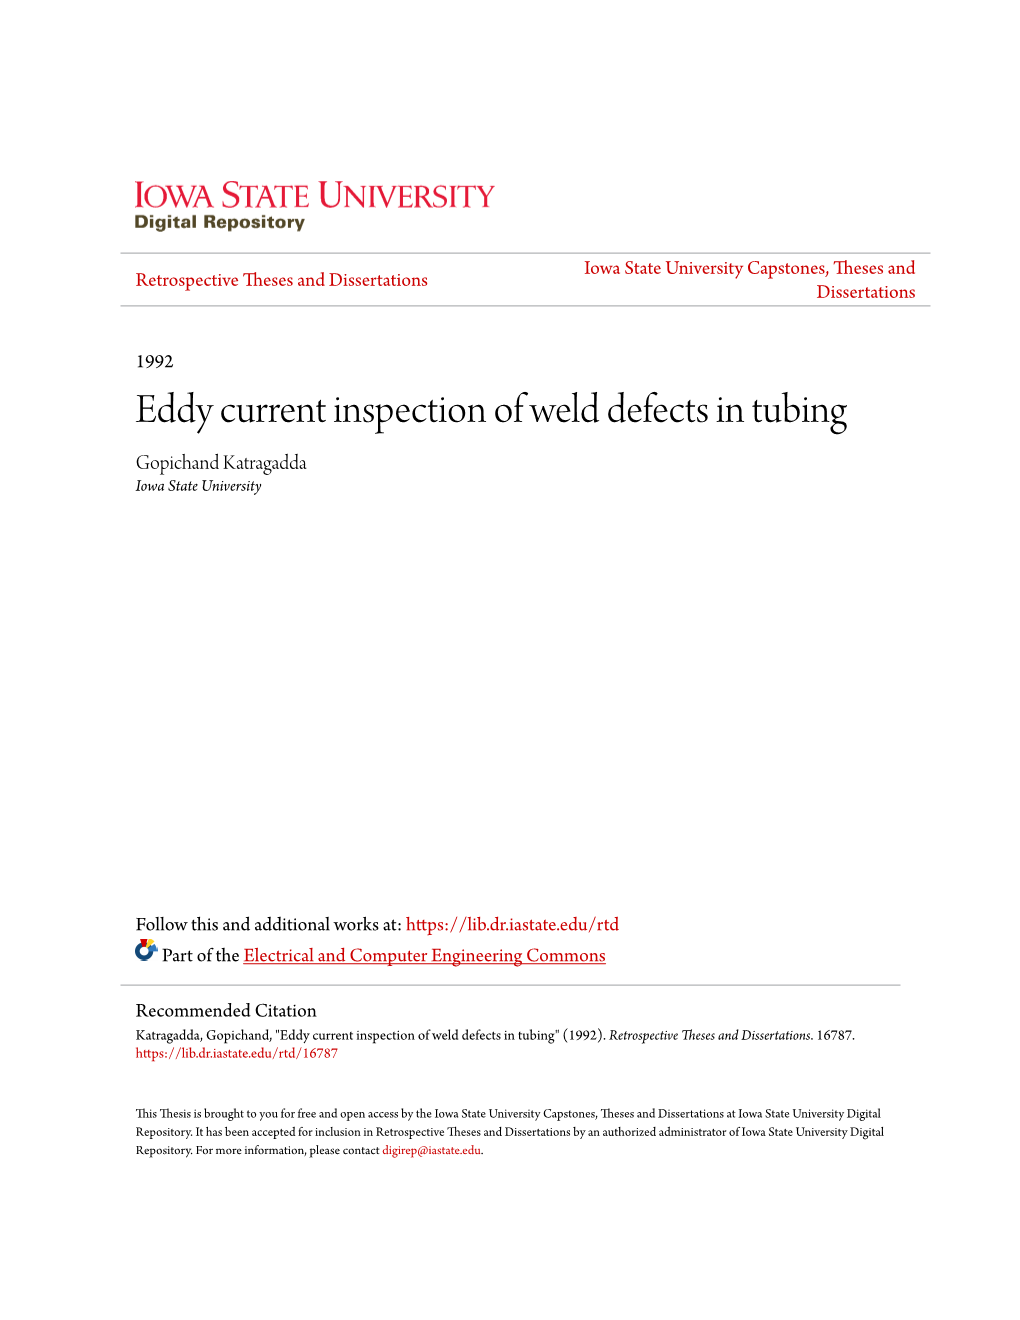 Eddy Current Inspection of Weld Defects in Tubing Gopichand Katragadda Iowa State University